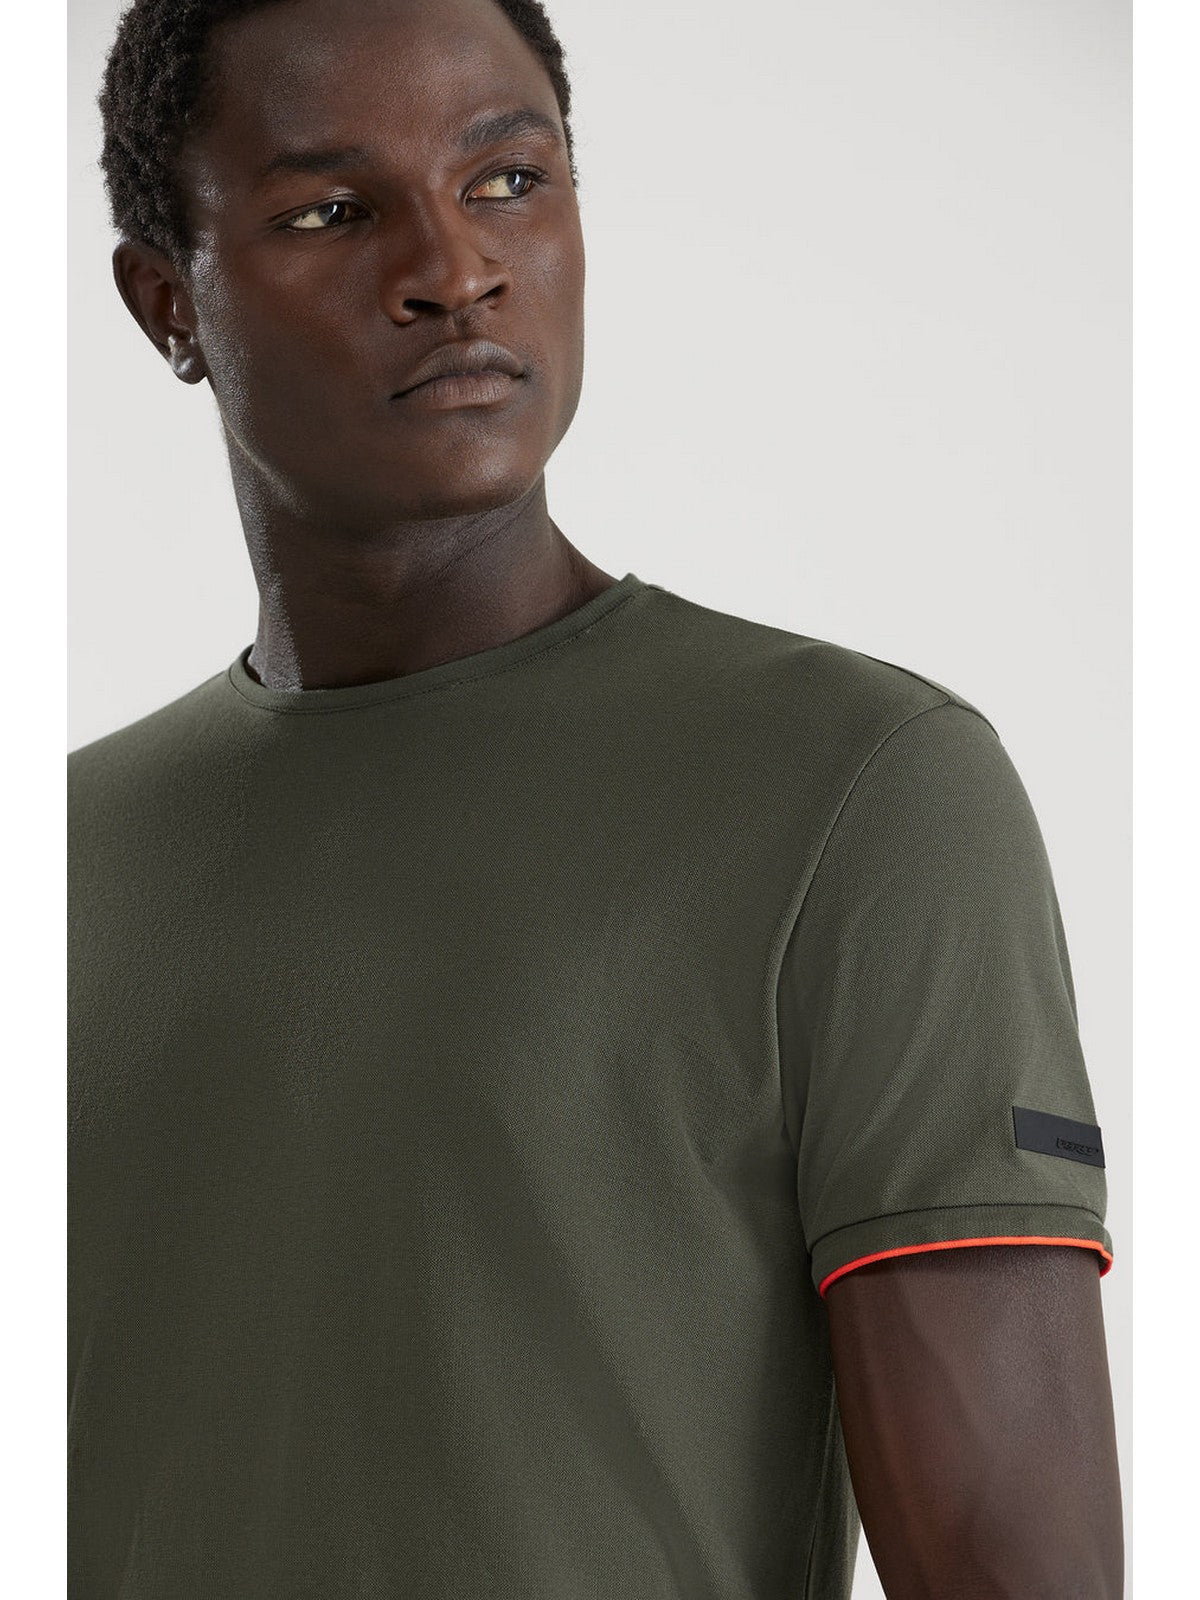 RRD T-Shirt et Polo Hommes 23138 21 Vert